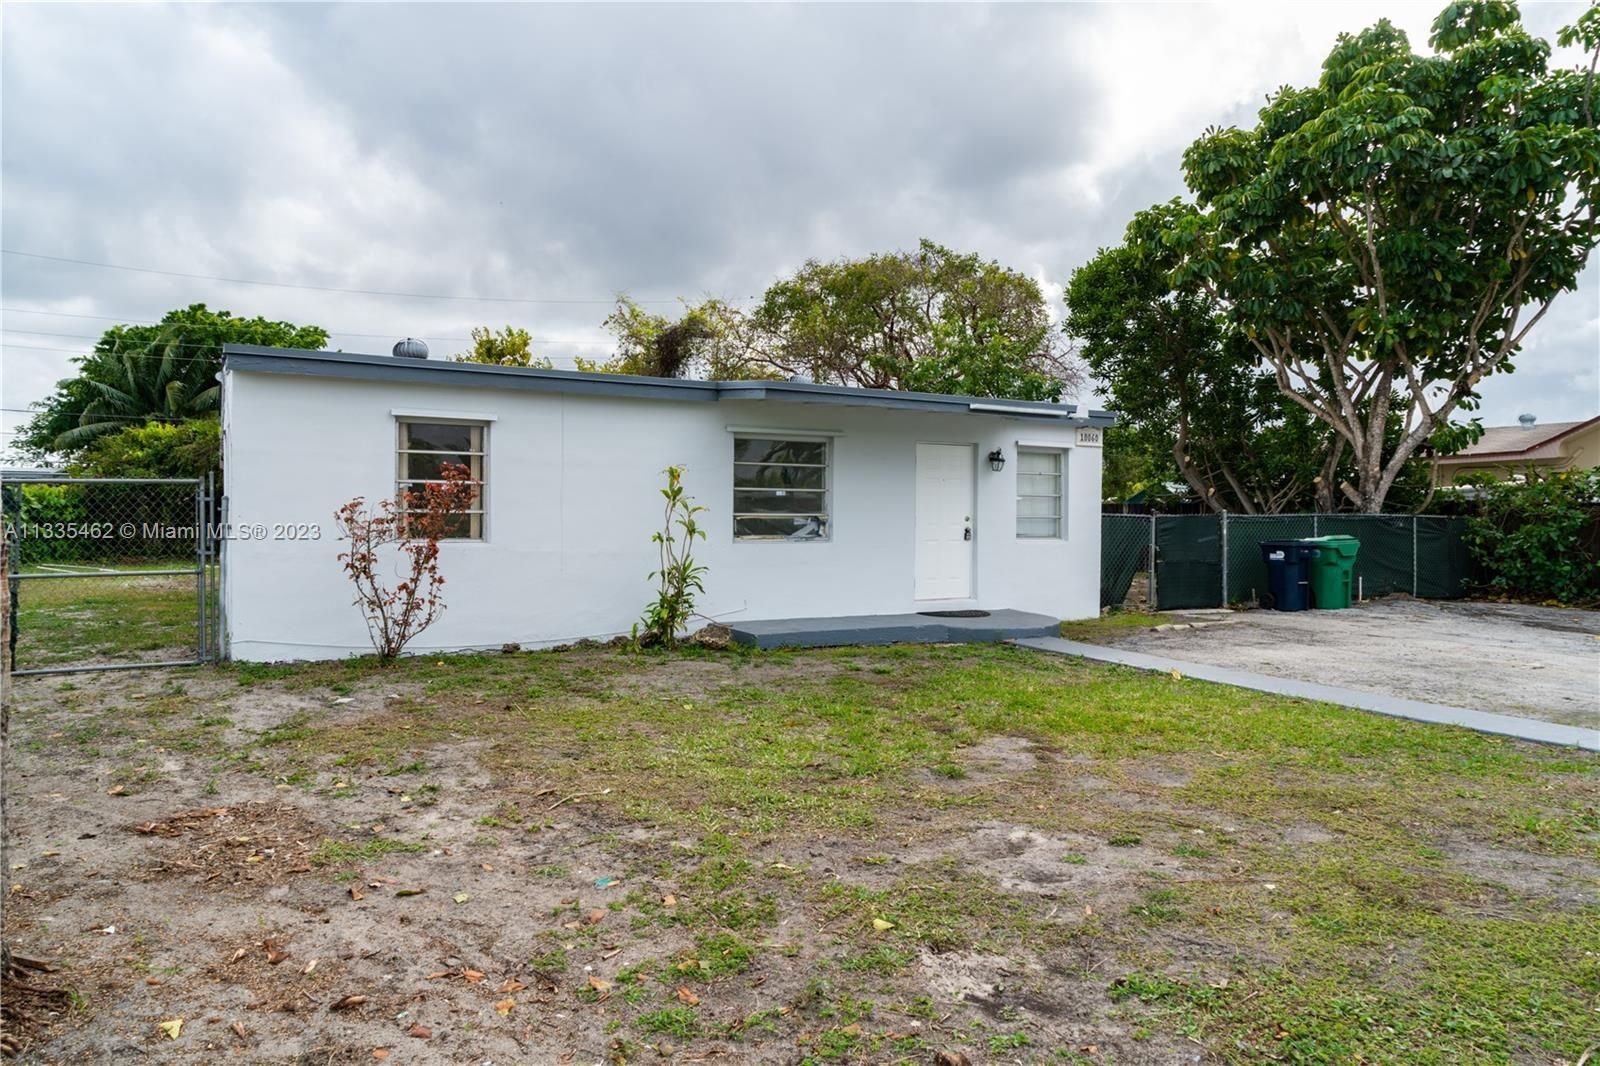 Real estate property located at 10060 50th Ter, Miami-Dade County, Miami, FL